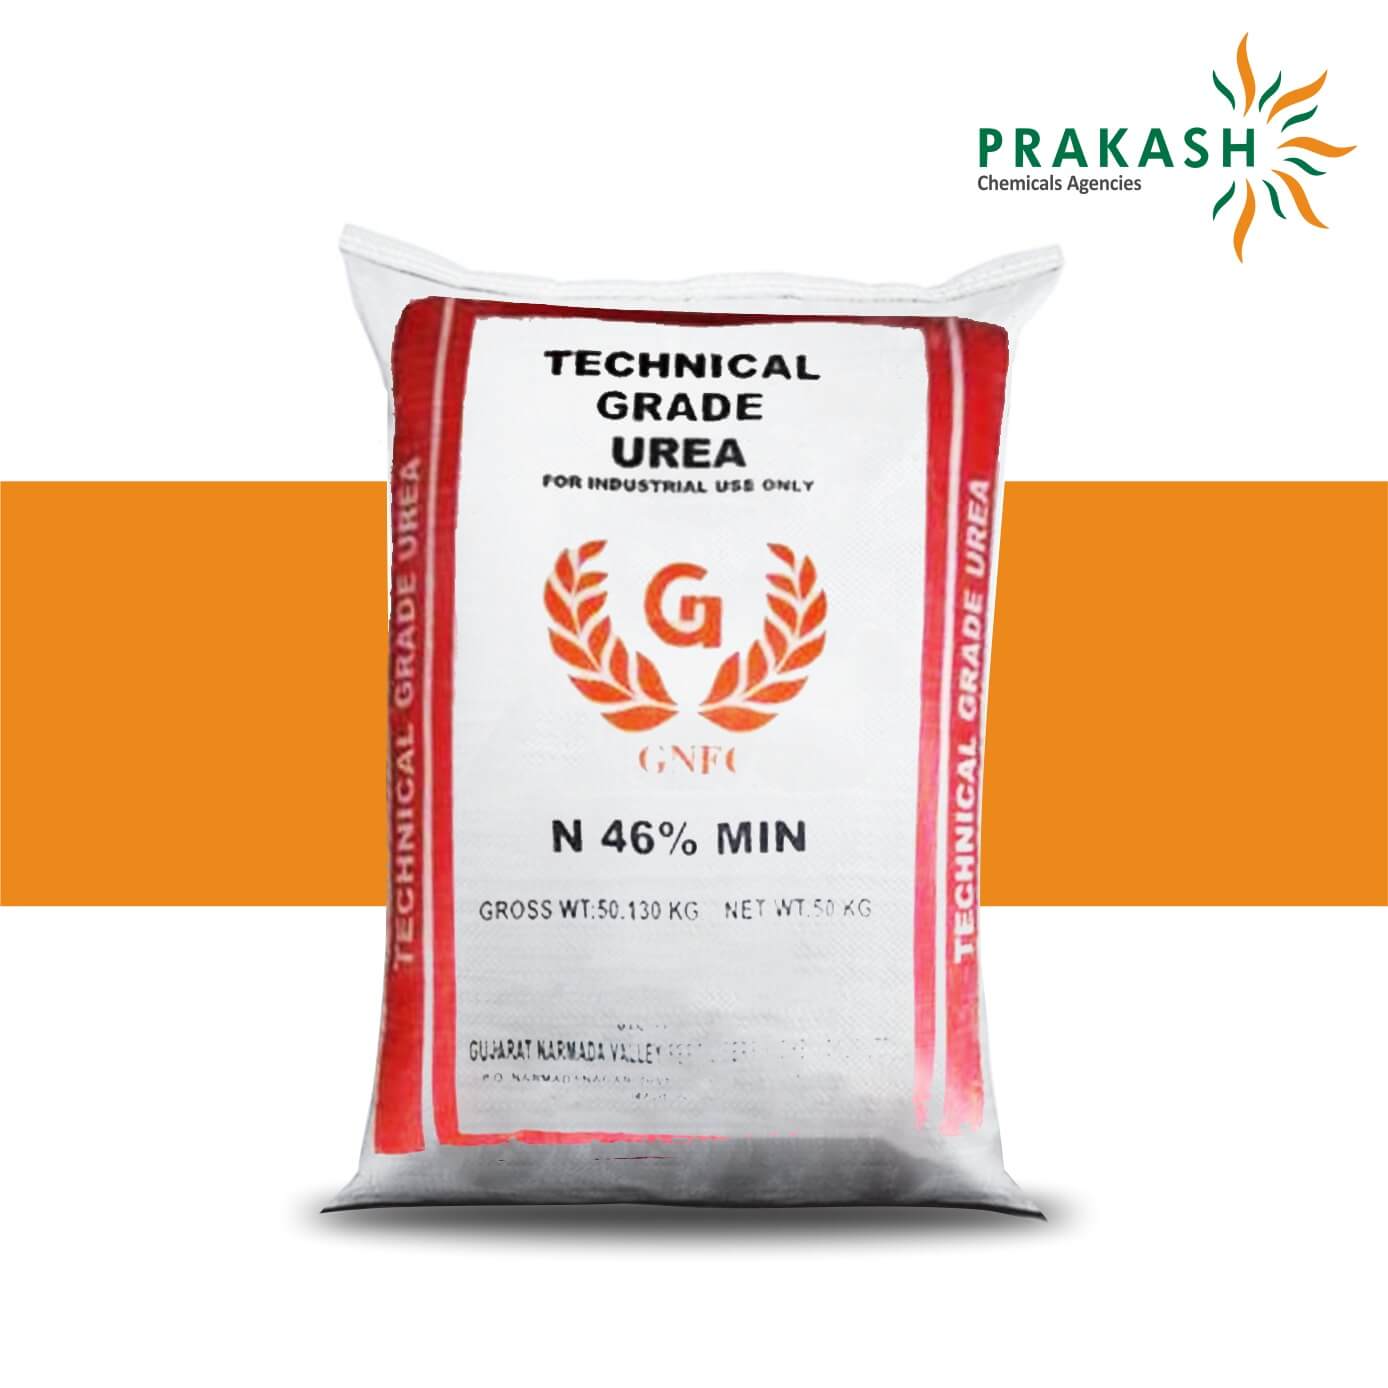 Prakash chemicals agencies Gujarat Technical Grade Urea, GNFC, 25Kg bag